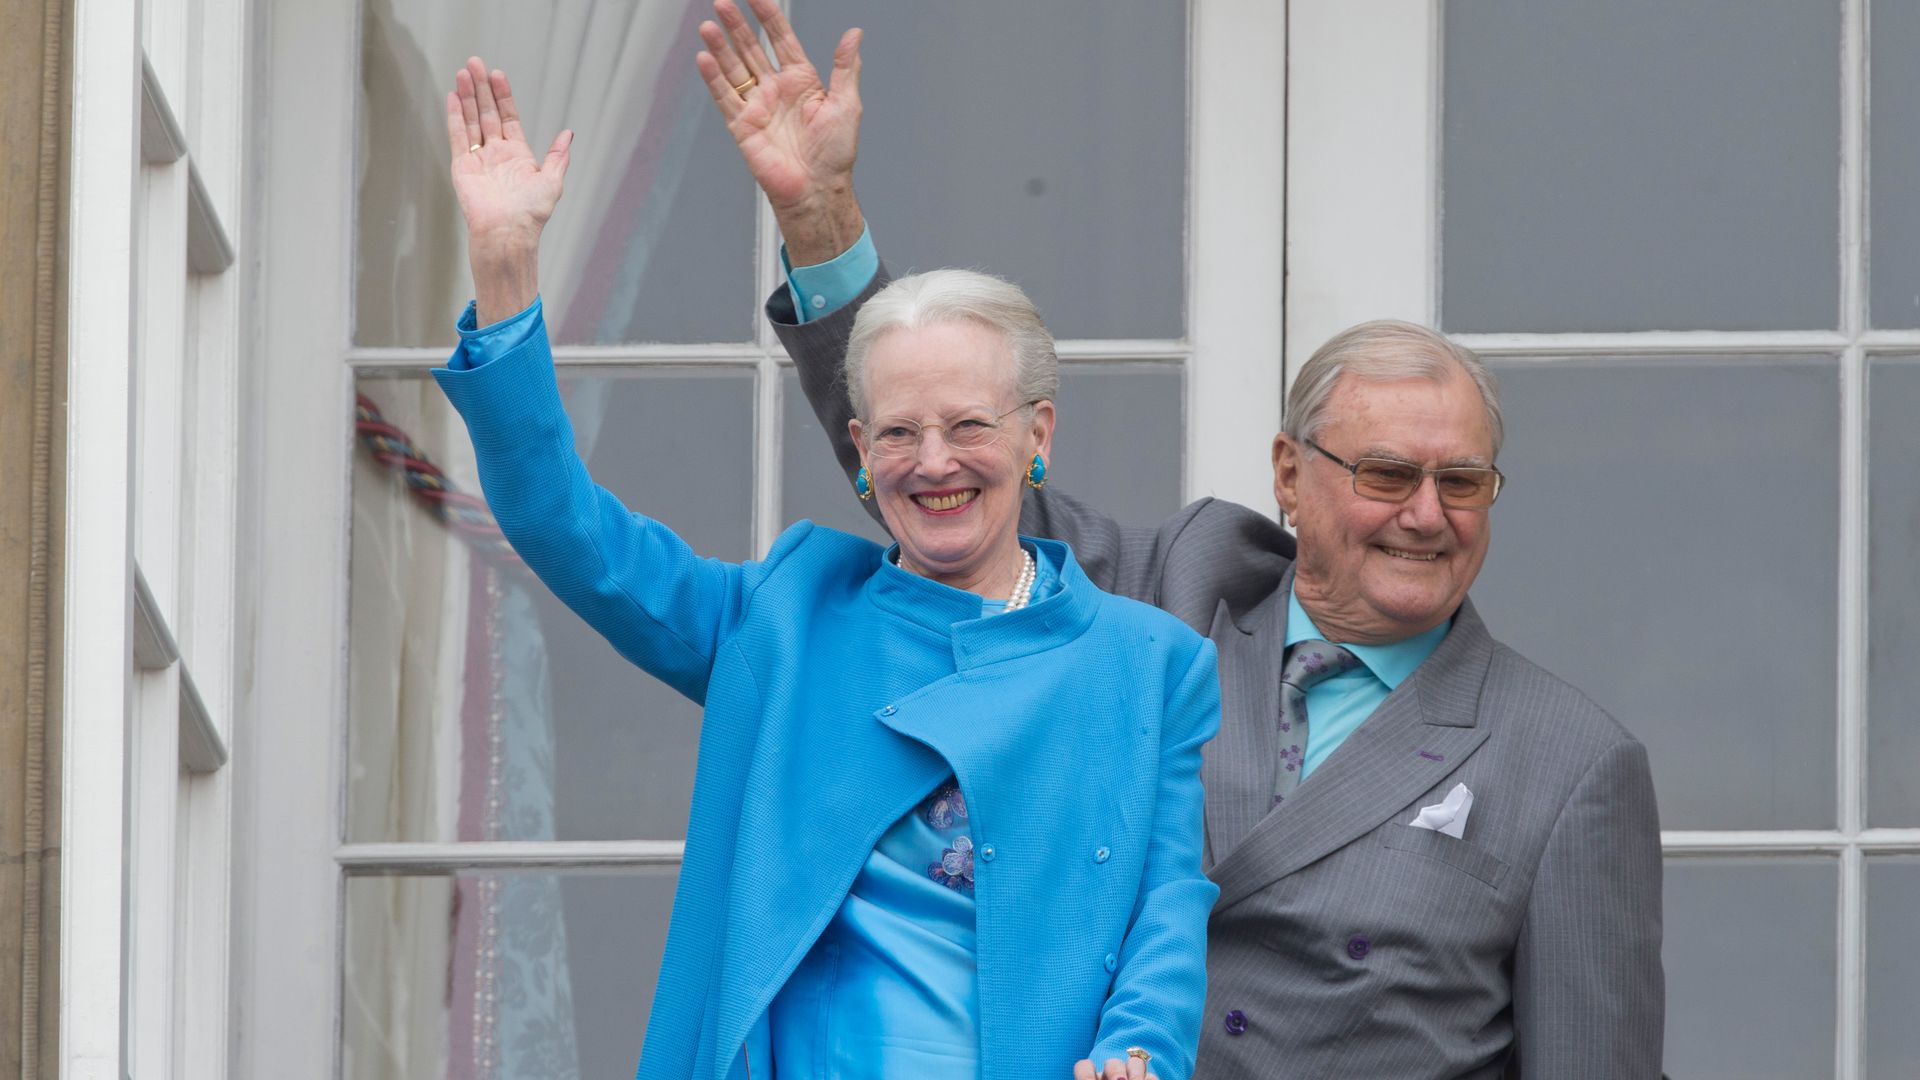 Queen Margrethe II of Denmark and Prince Henrik of Denmark attend Queen Margrethe's 76th Birthday Celebration at Amalienborg Palace 